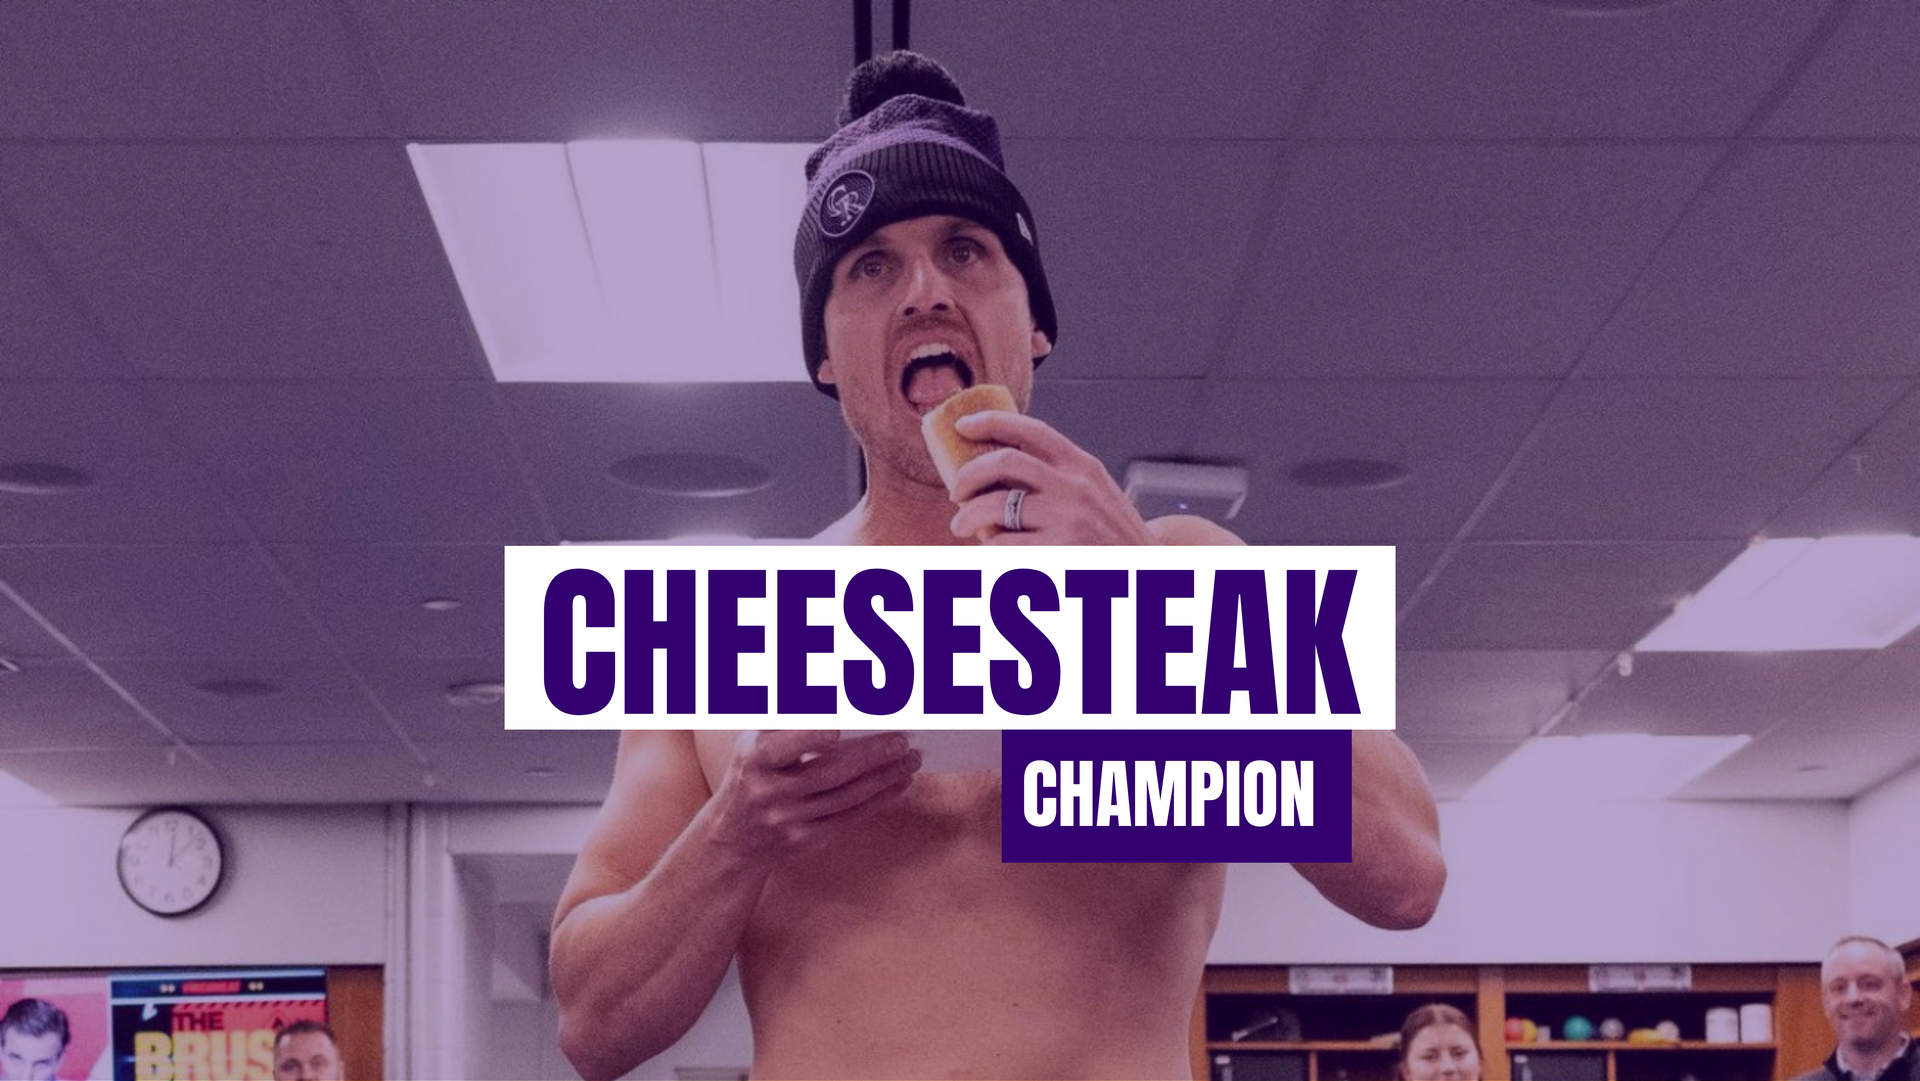 Mike Jasperson: Cheesesteak Champion